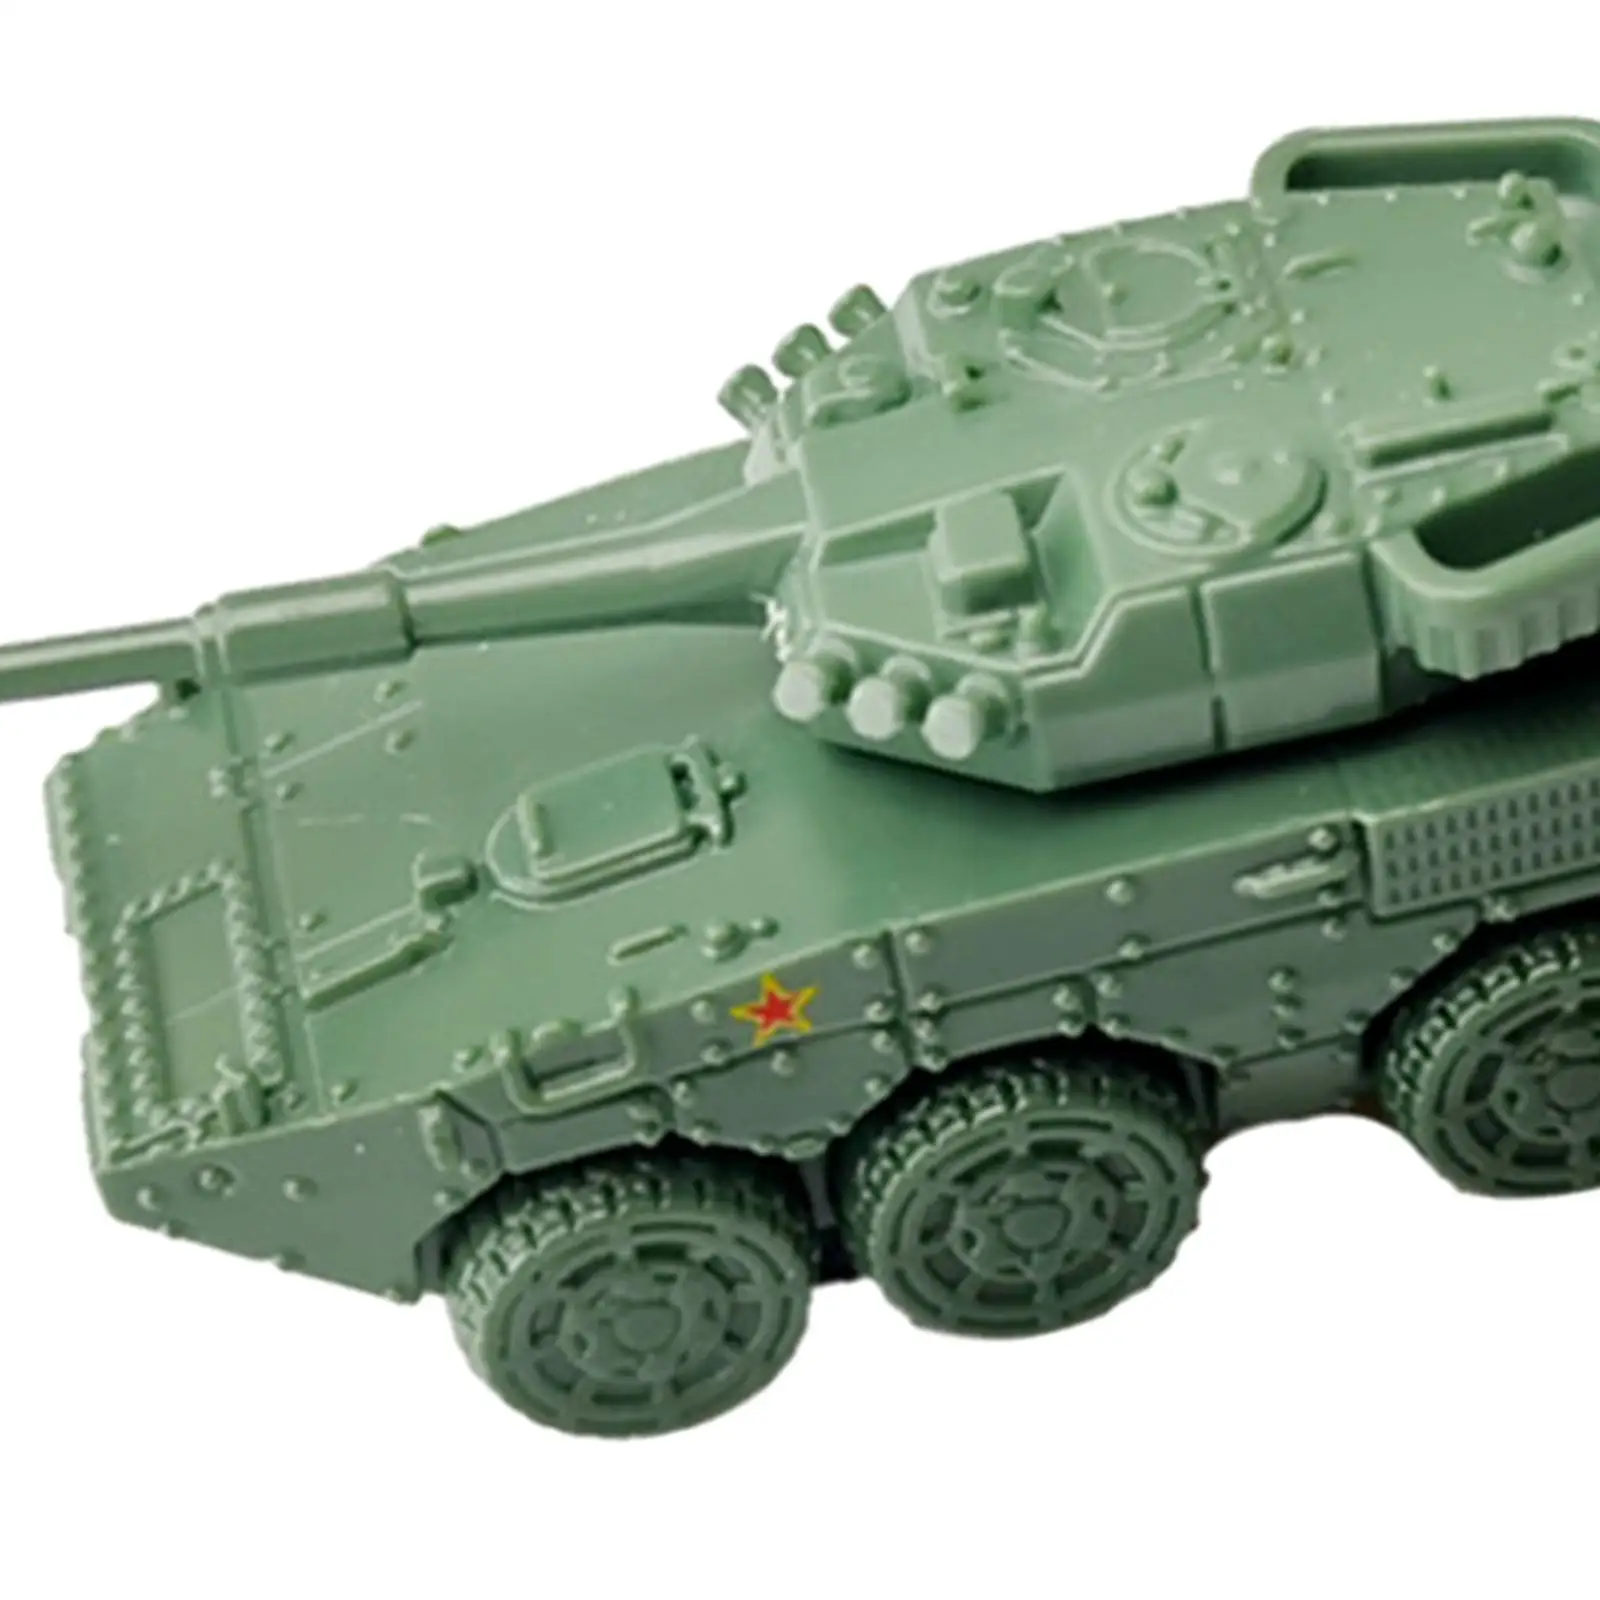 4D 1/144 Tank Model Kits Building Kits Vehicle Model Toy Micro Landscape